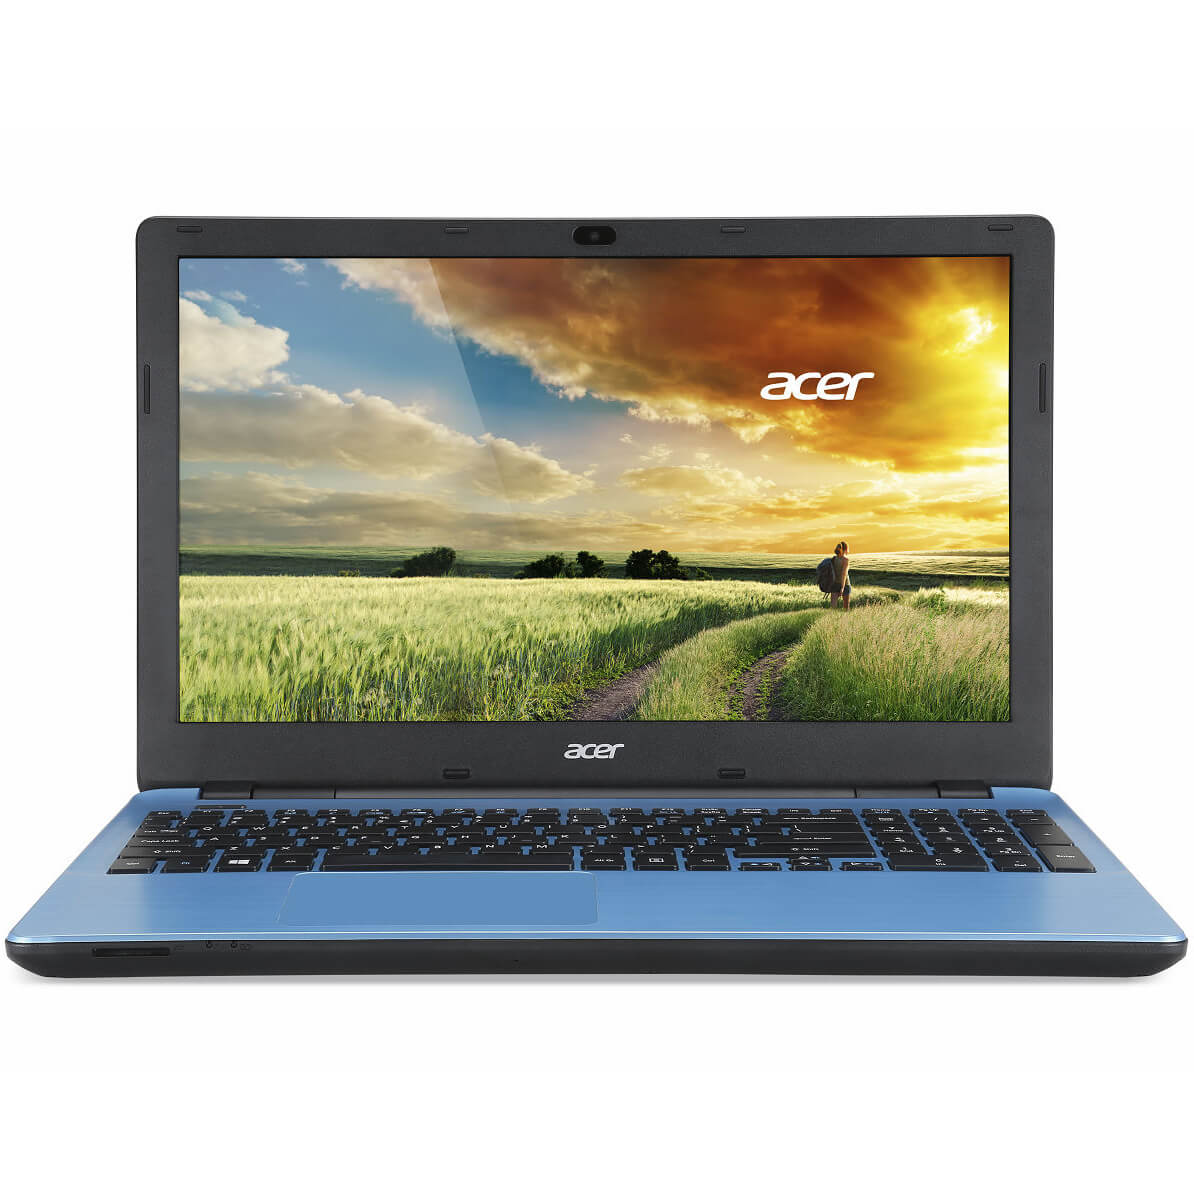  Laptop Acer Aspire E5, Intel Celeron N2940, 4GB DDR3, HDD 500GB, Intel HD Graphics, Linux 